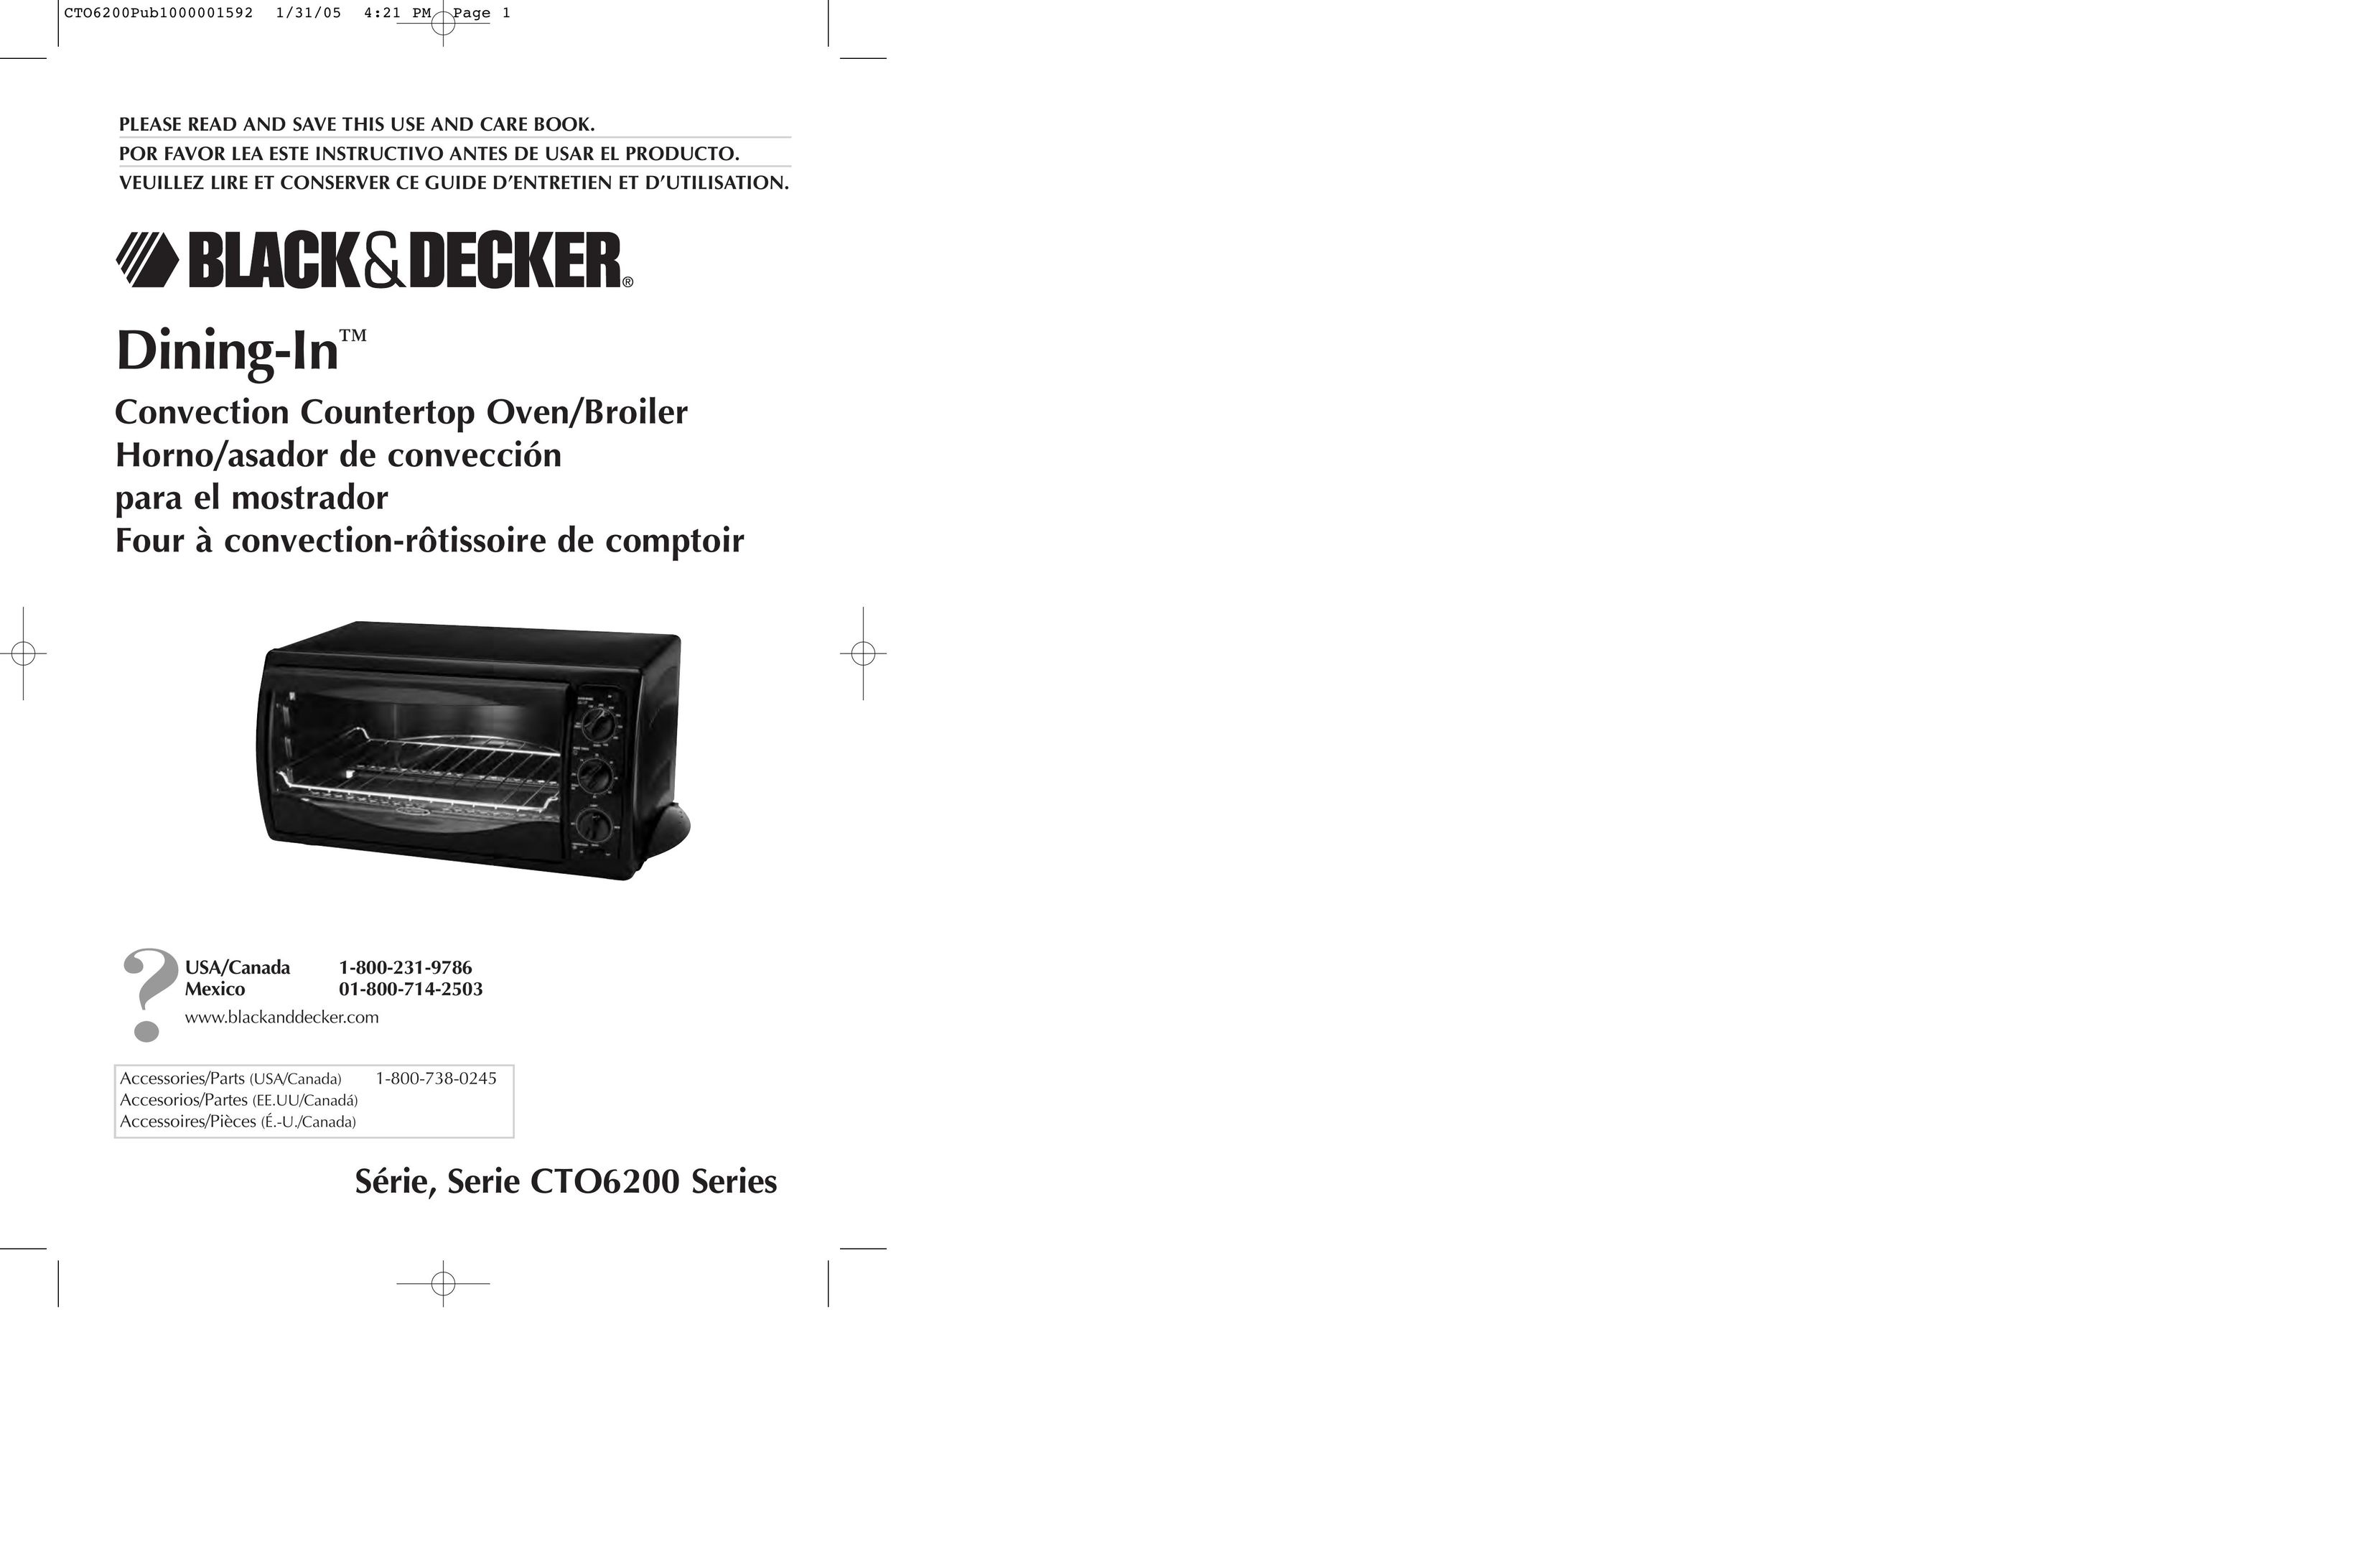 Black & Decker CTO6200 Series Oven User Manual